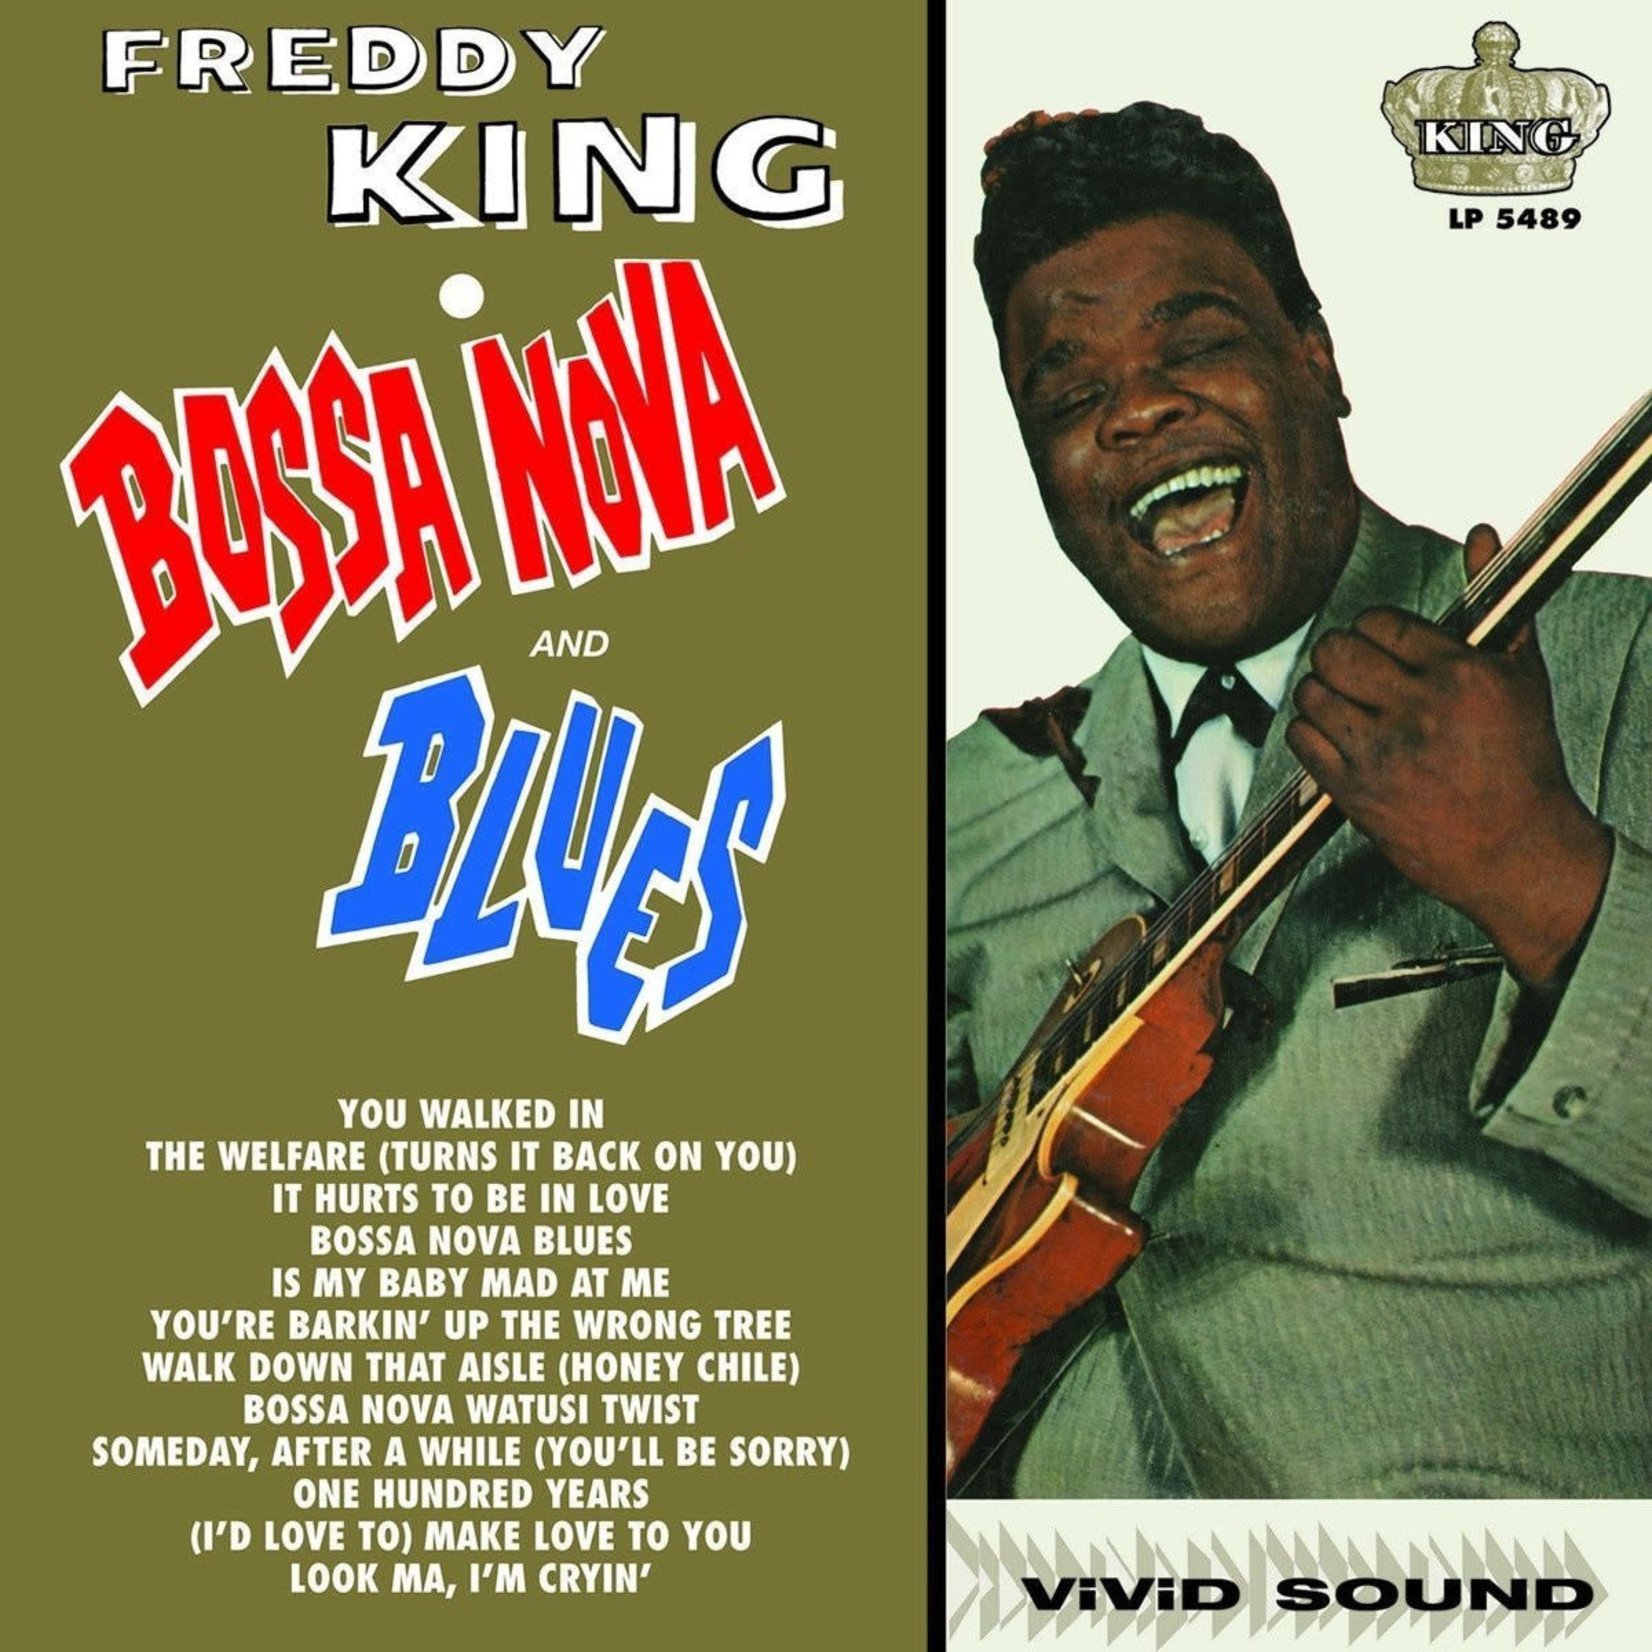 [New] Freddy King - Bossa Nova and Blues